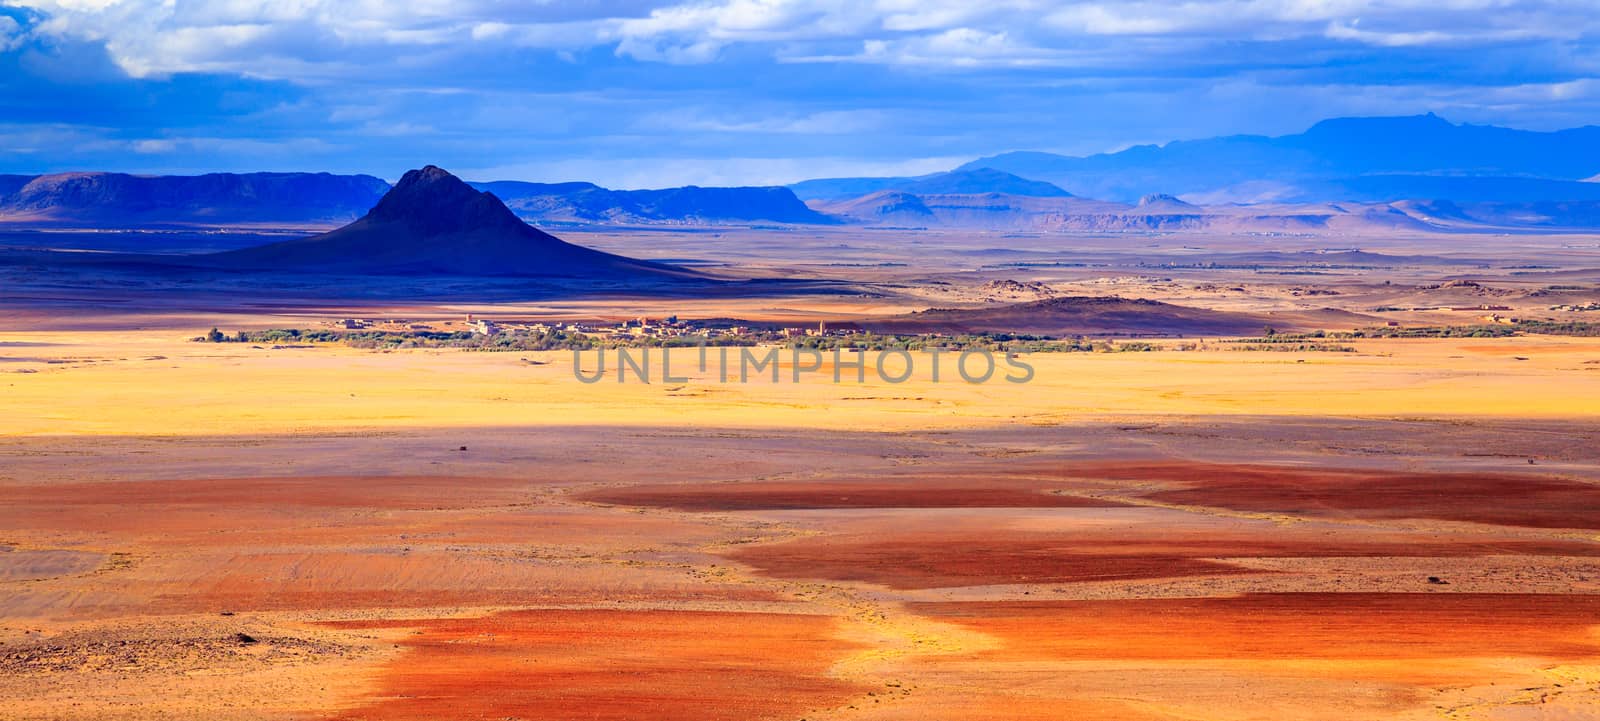 coloreful panoramic moroccan mountain landscape in desert by pixinoo